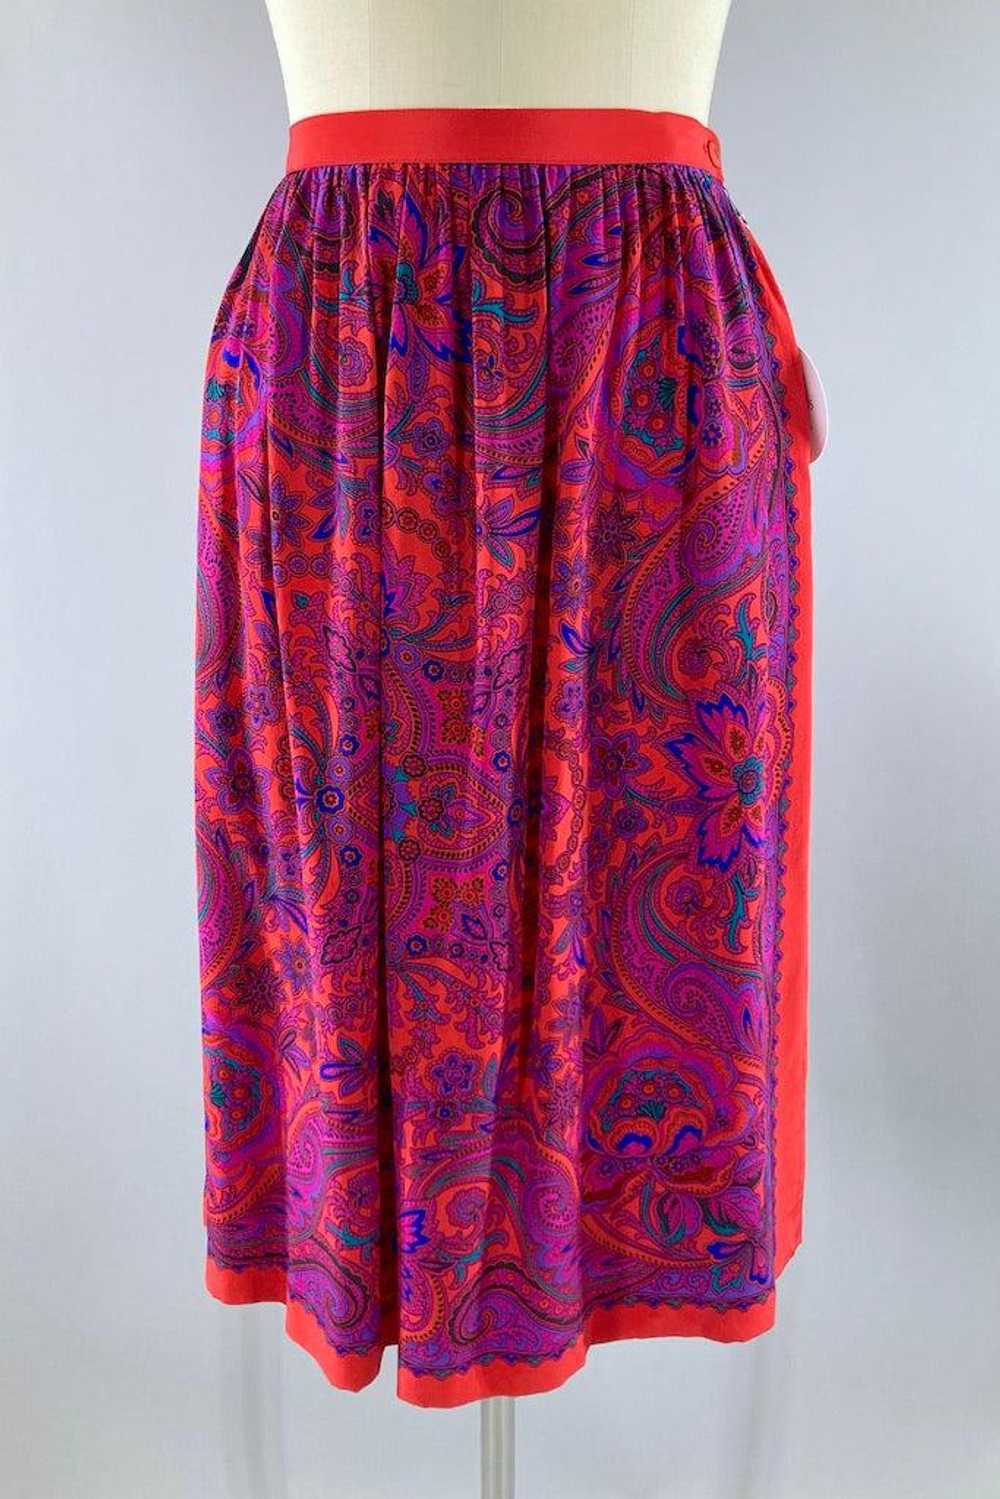 Vintage 80s Red & Purple Silk Skirt - image 1